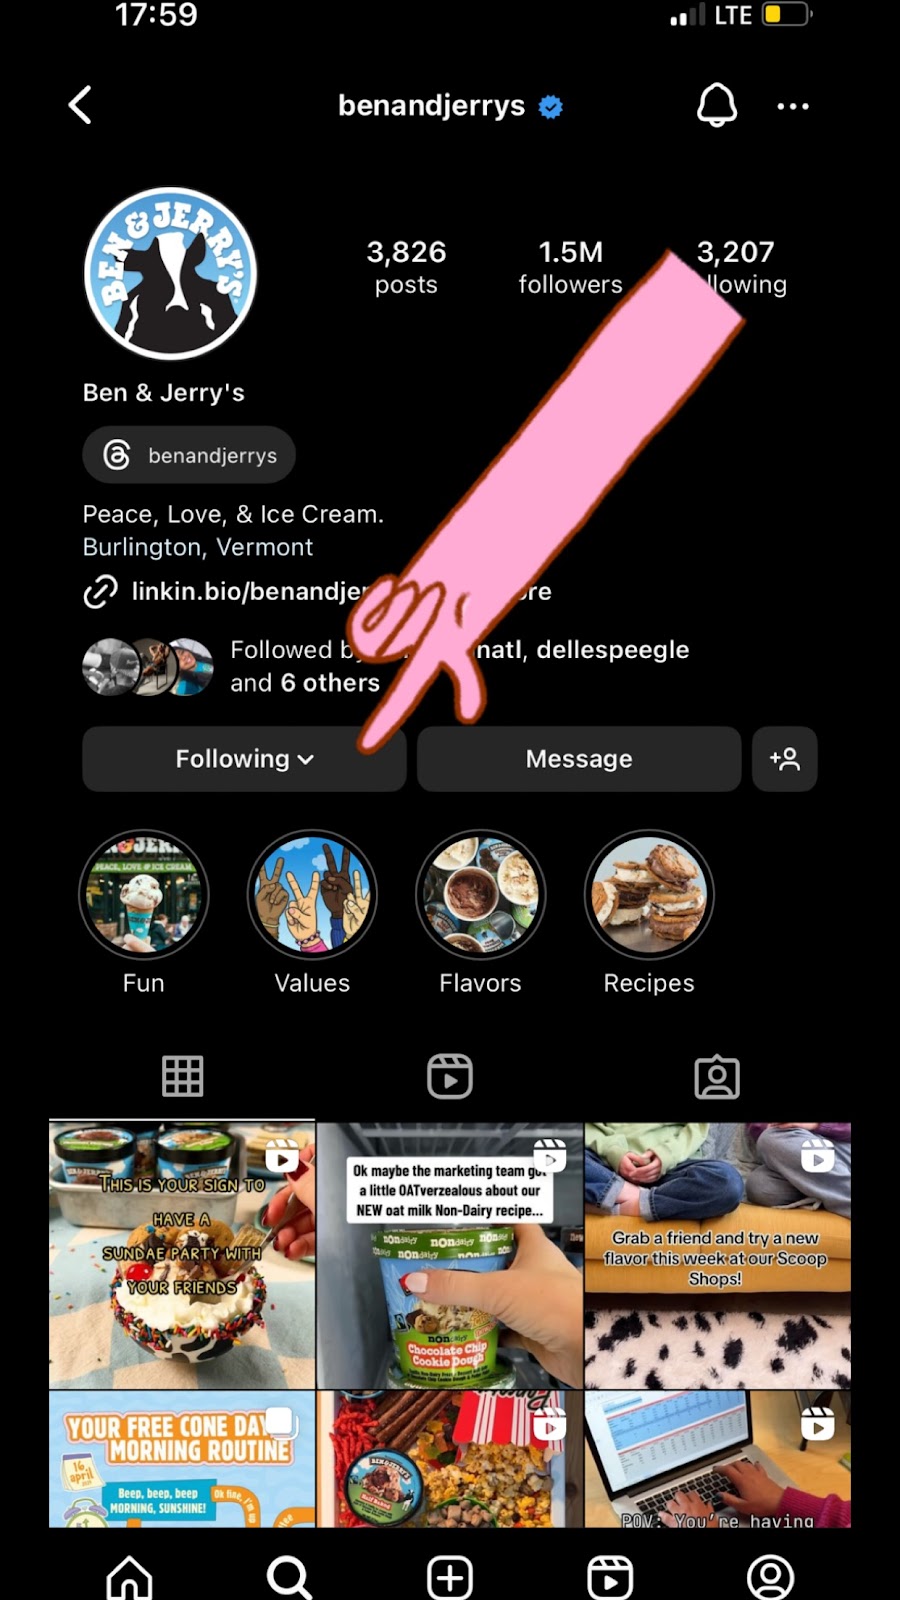 Screenshot of Ben & Jerry's "Values" highlight on Instagram